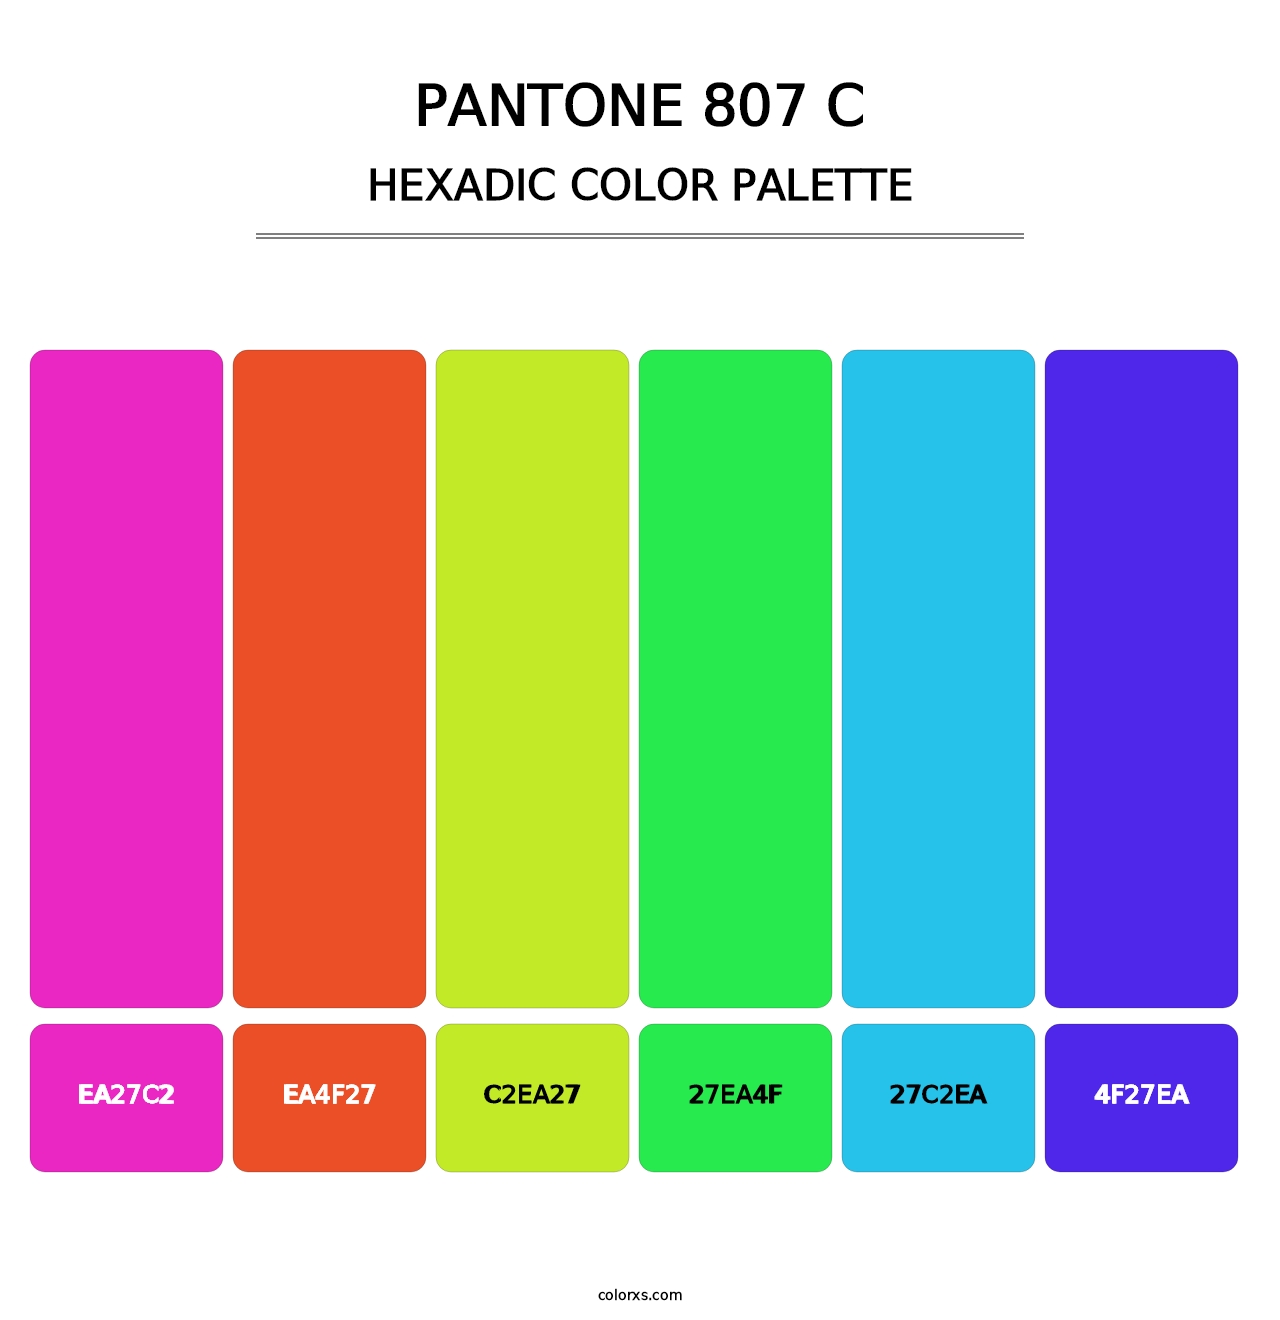 PANTONE 807 C - Hexadic Color Palette